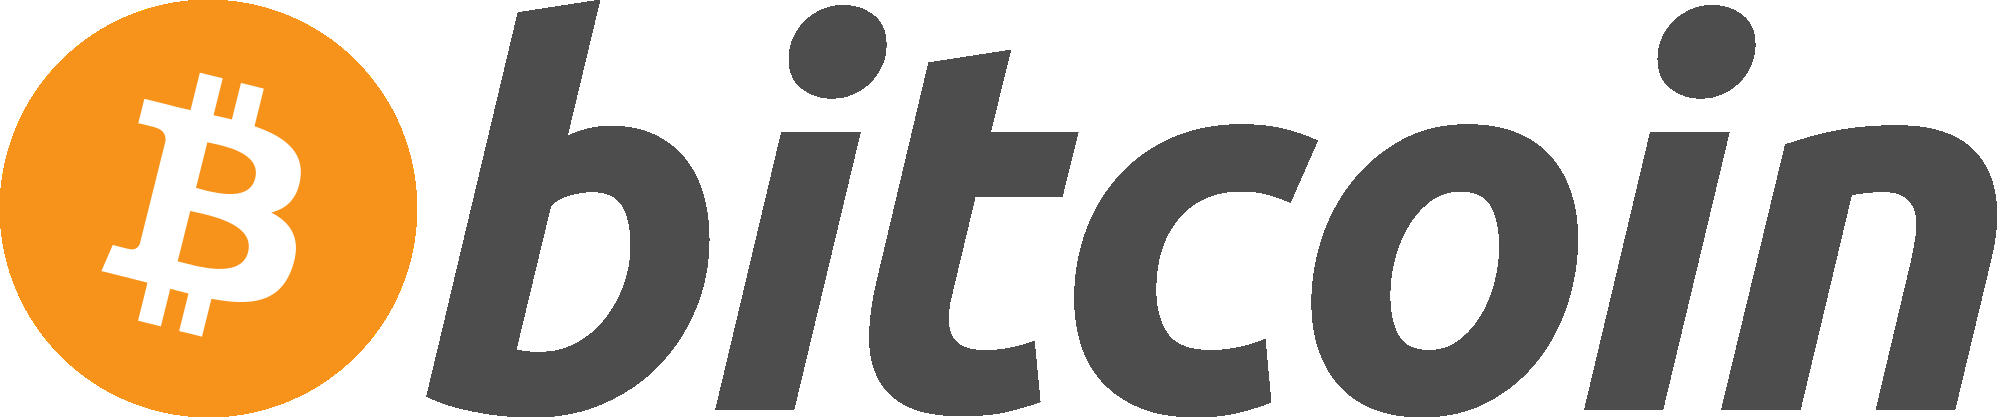 Bitcoin_logo.svg